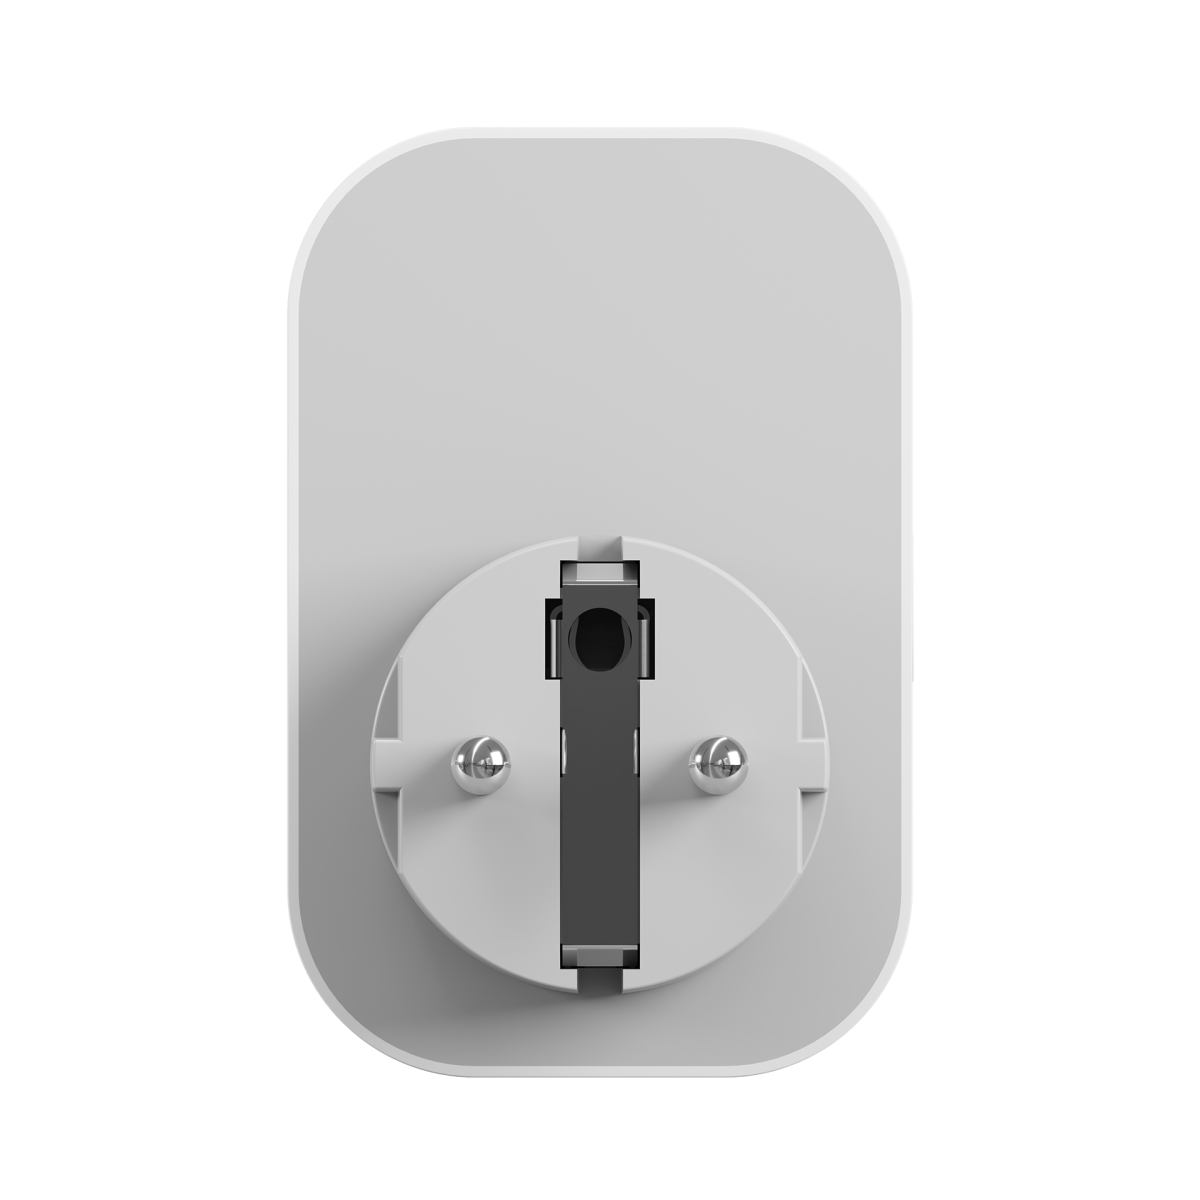 TESLA Smart Plug SP300 3 USB